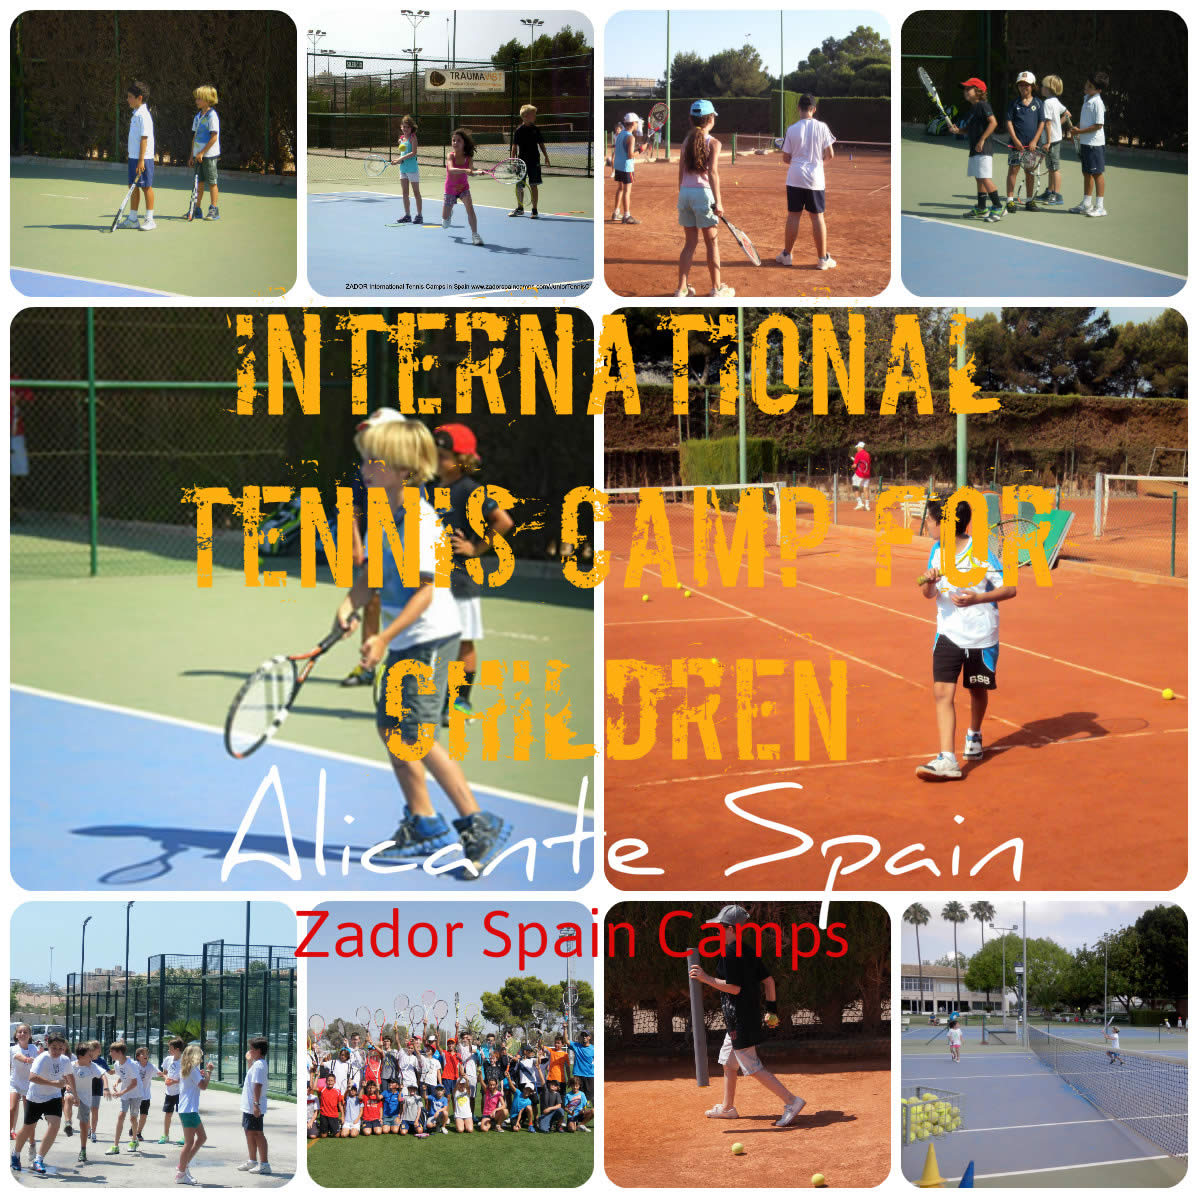 Tennis Camp for children Alicante Spain